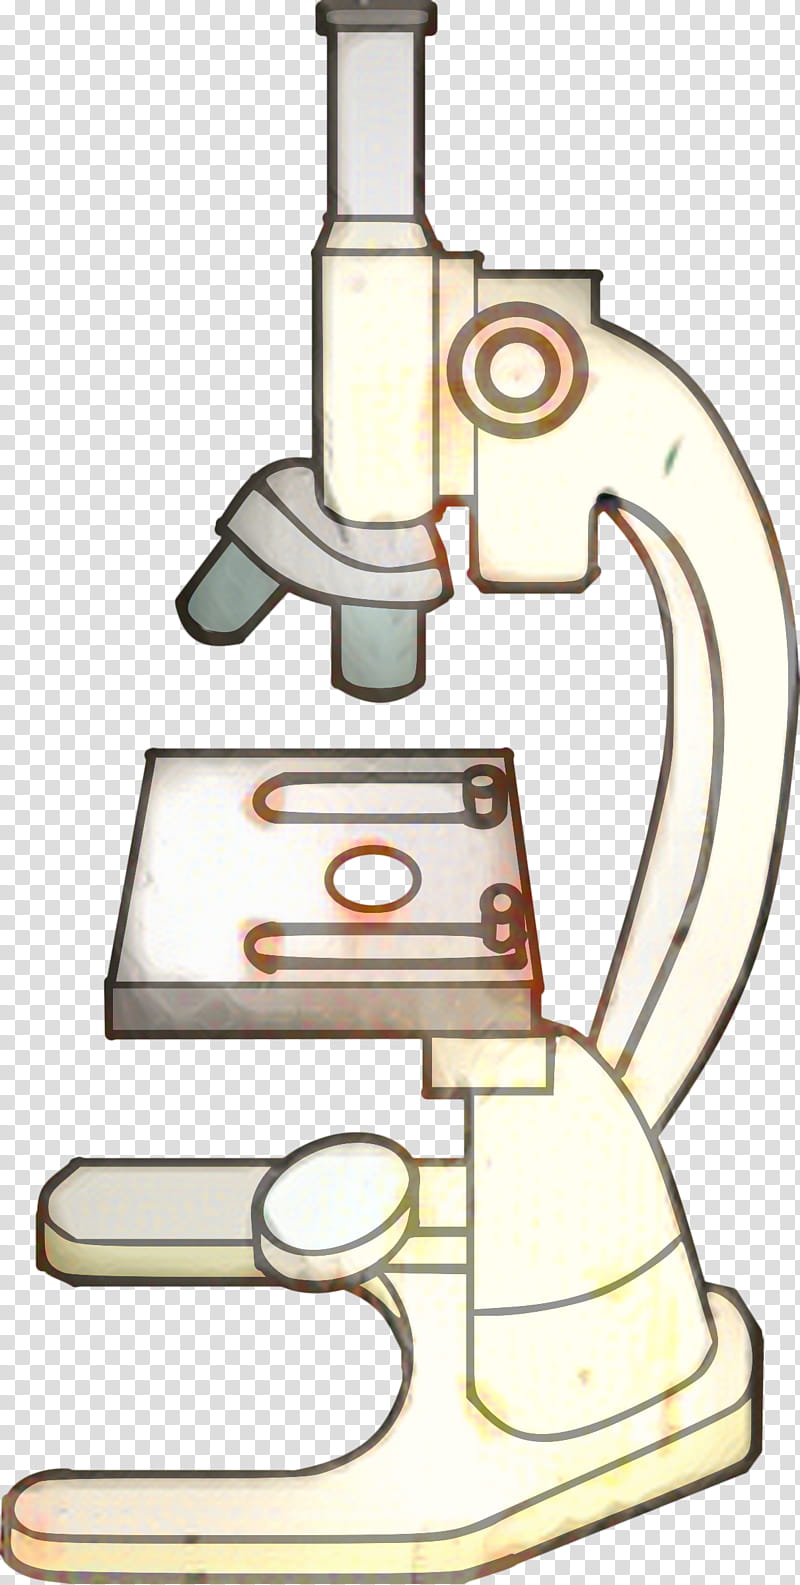 Microscope, Cartoon, Line Art transparent background PNG clipart